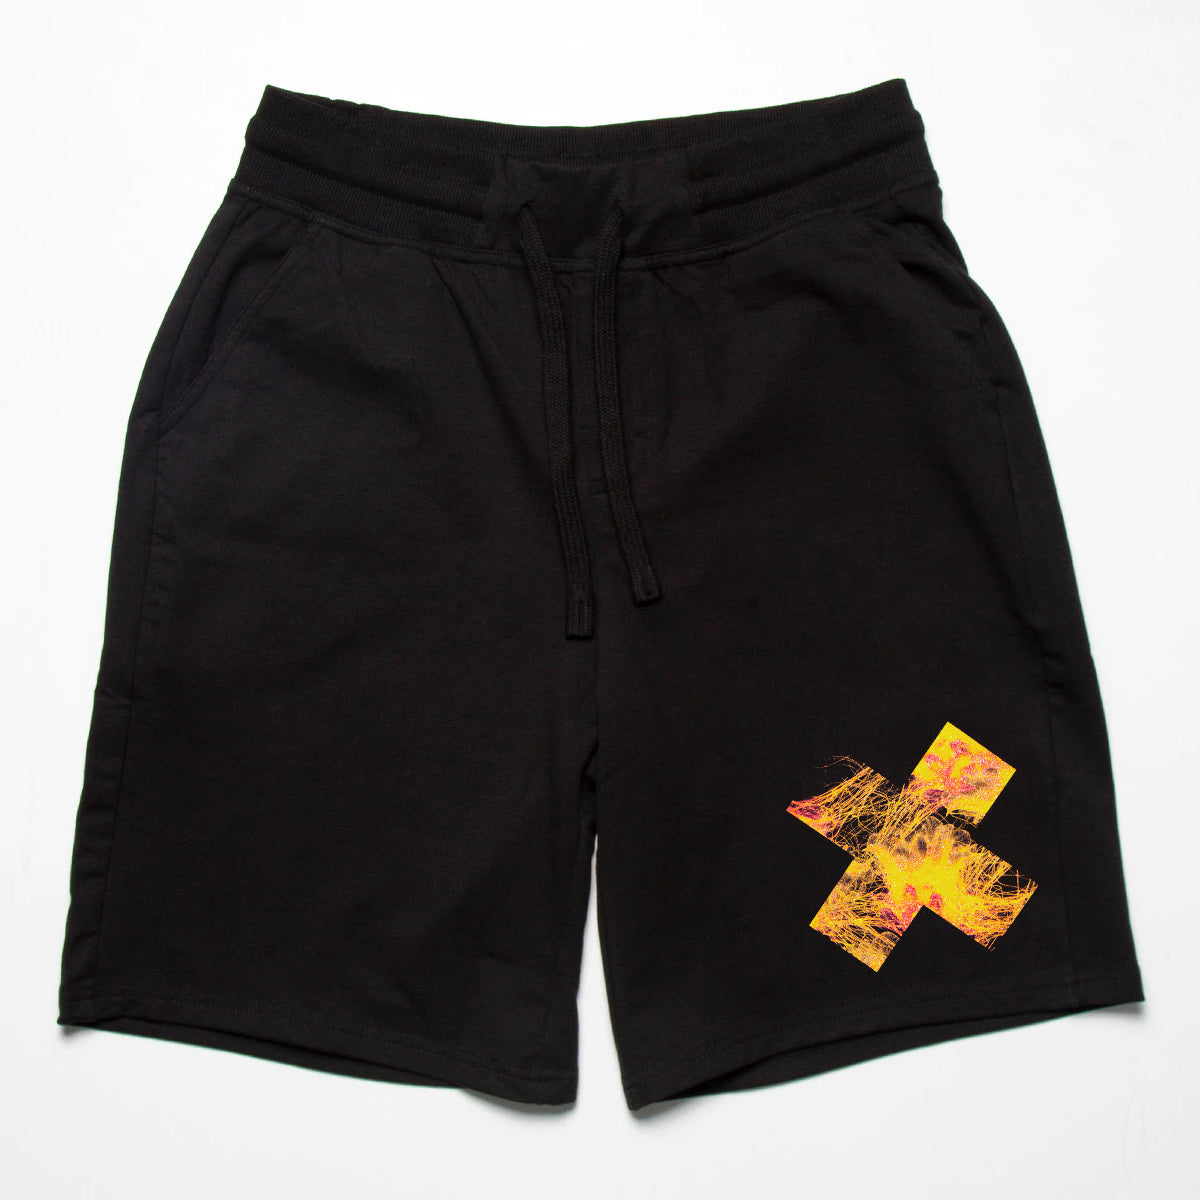 Lifeforms X Imprint - Jersey Shorts - Black